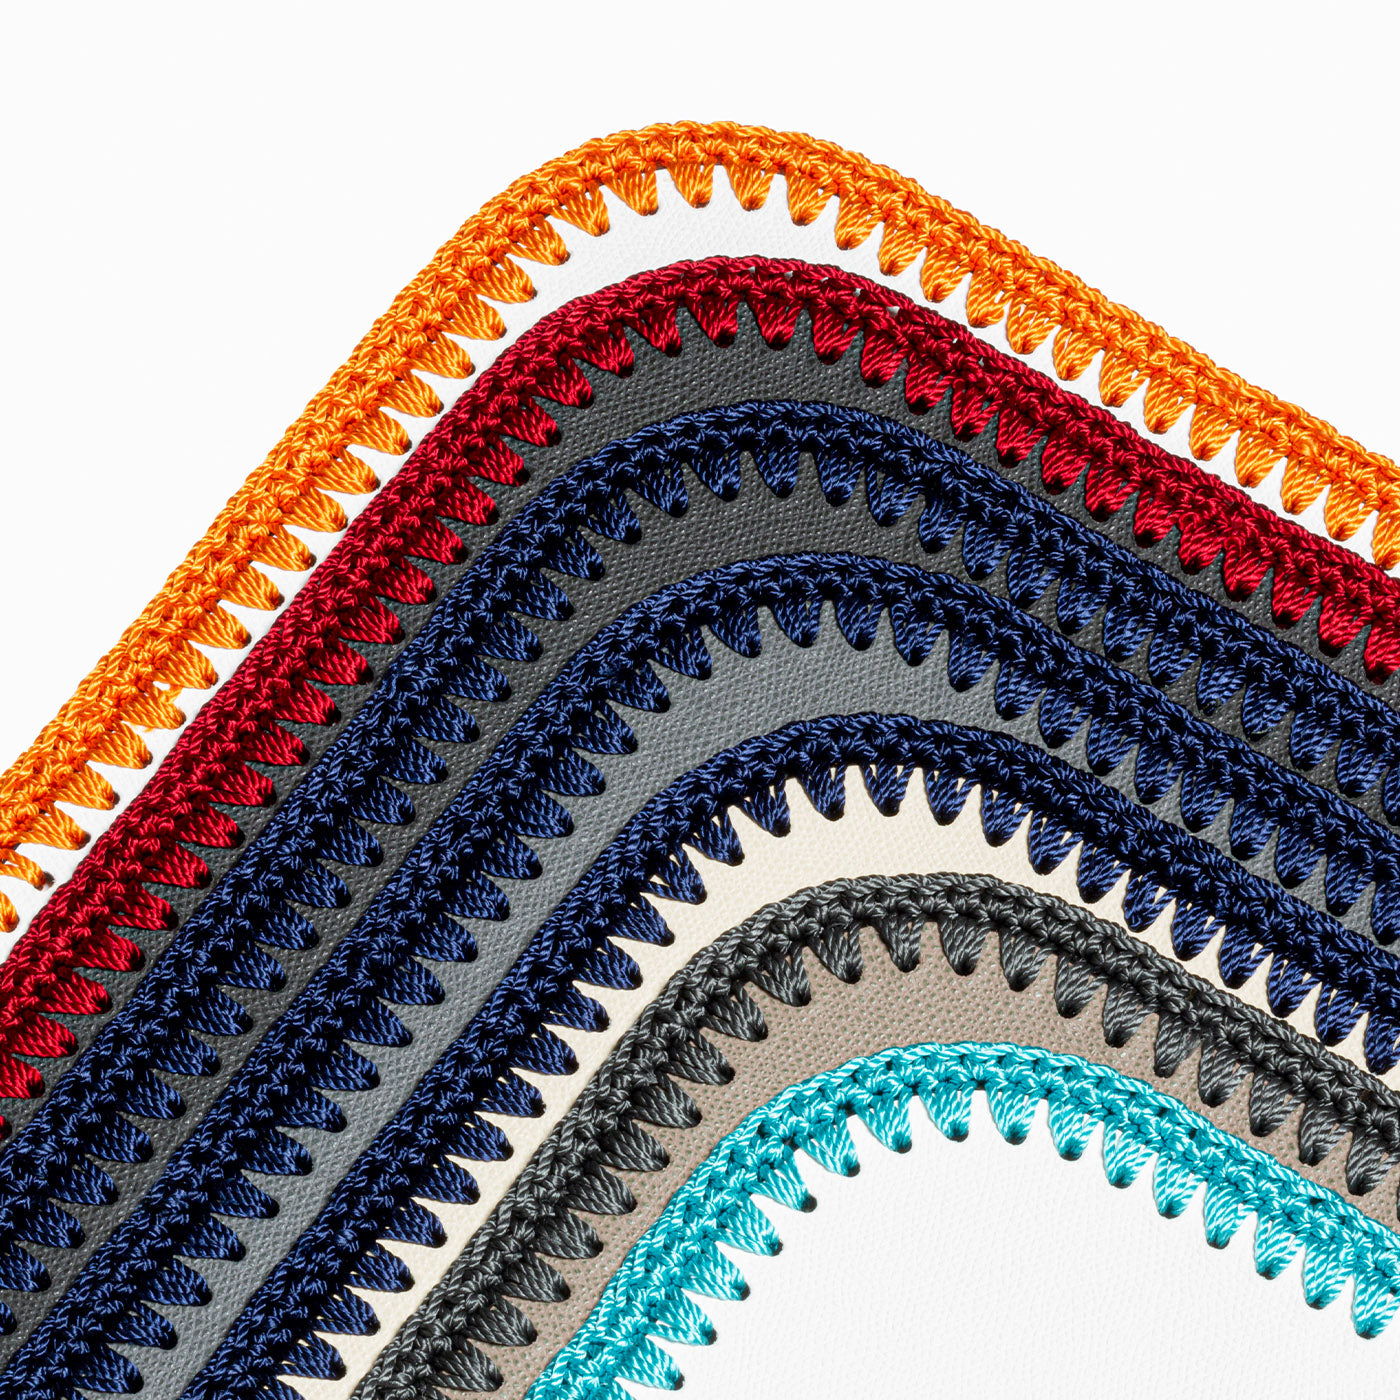 Rochelle Leather & Crochet Placemats Rectangular - Gray & Blue #2 - Alternative view 1